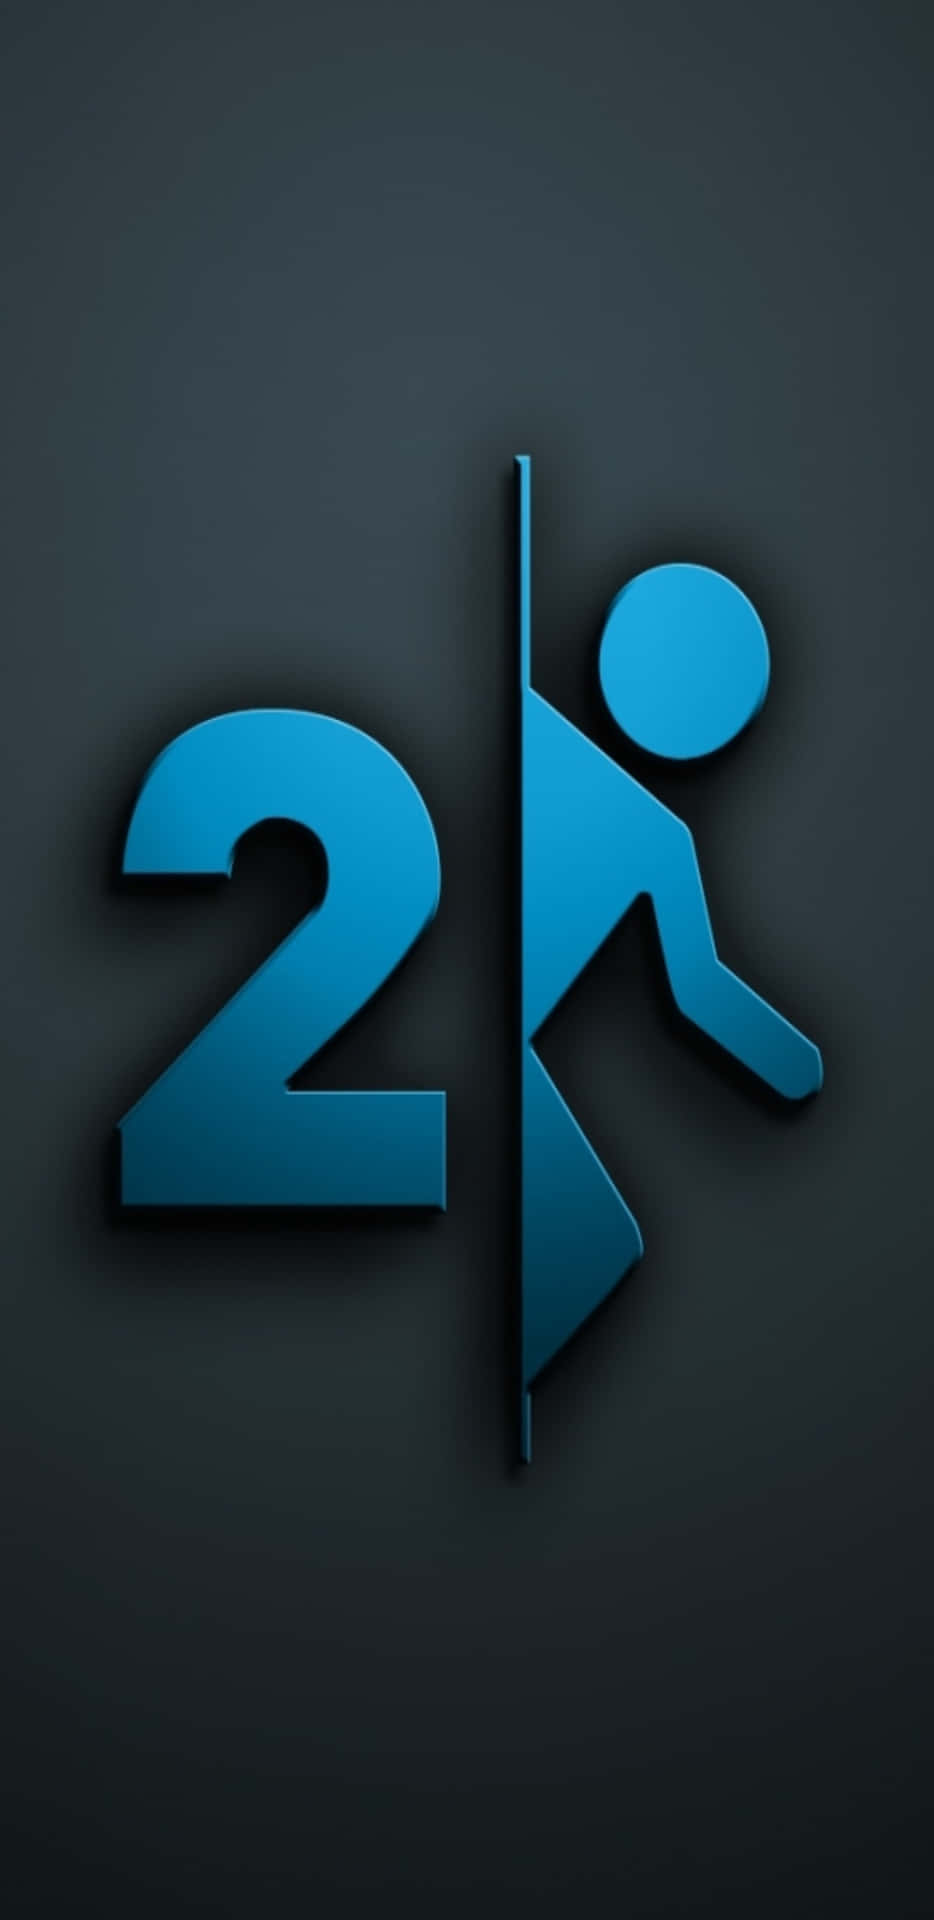 Blue Pixel 3XL Portal 2 Background